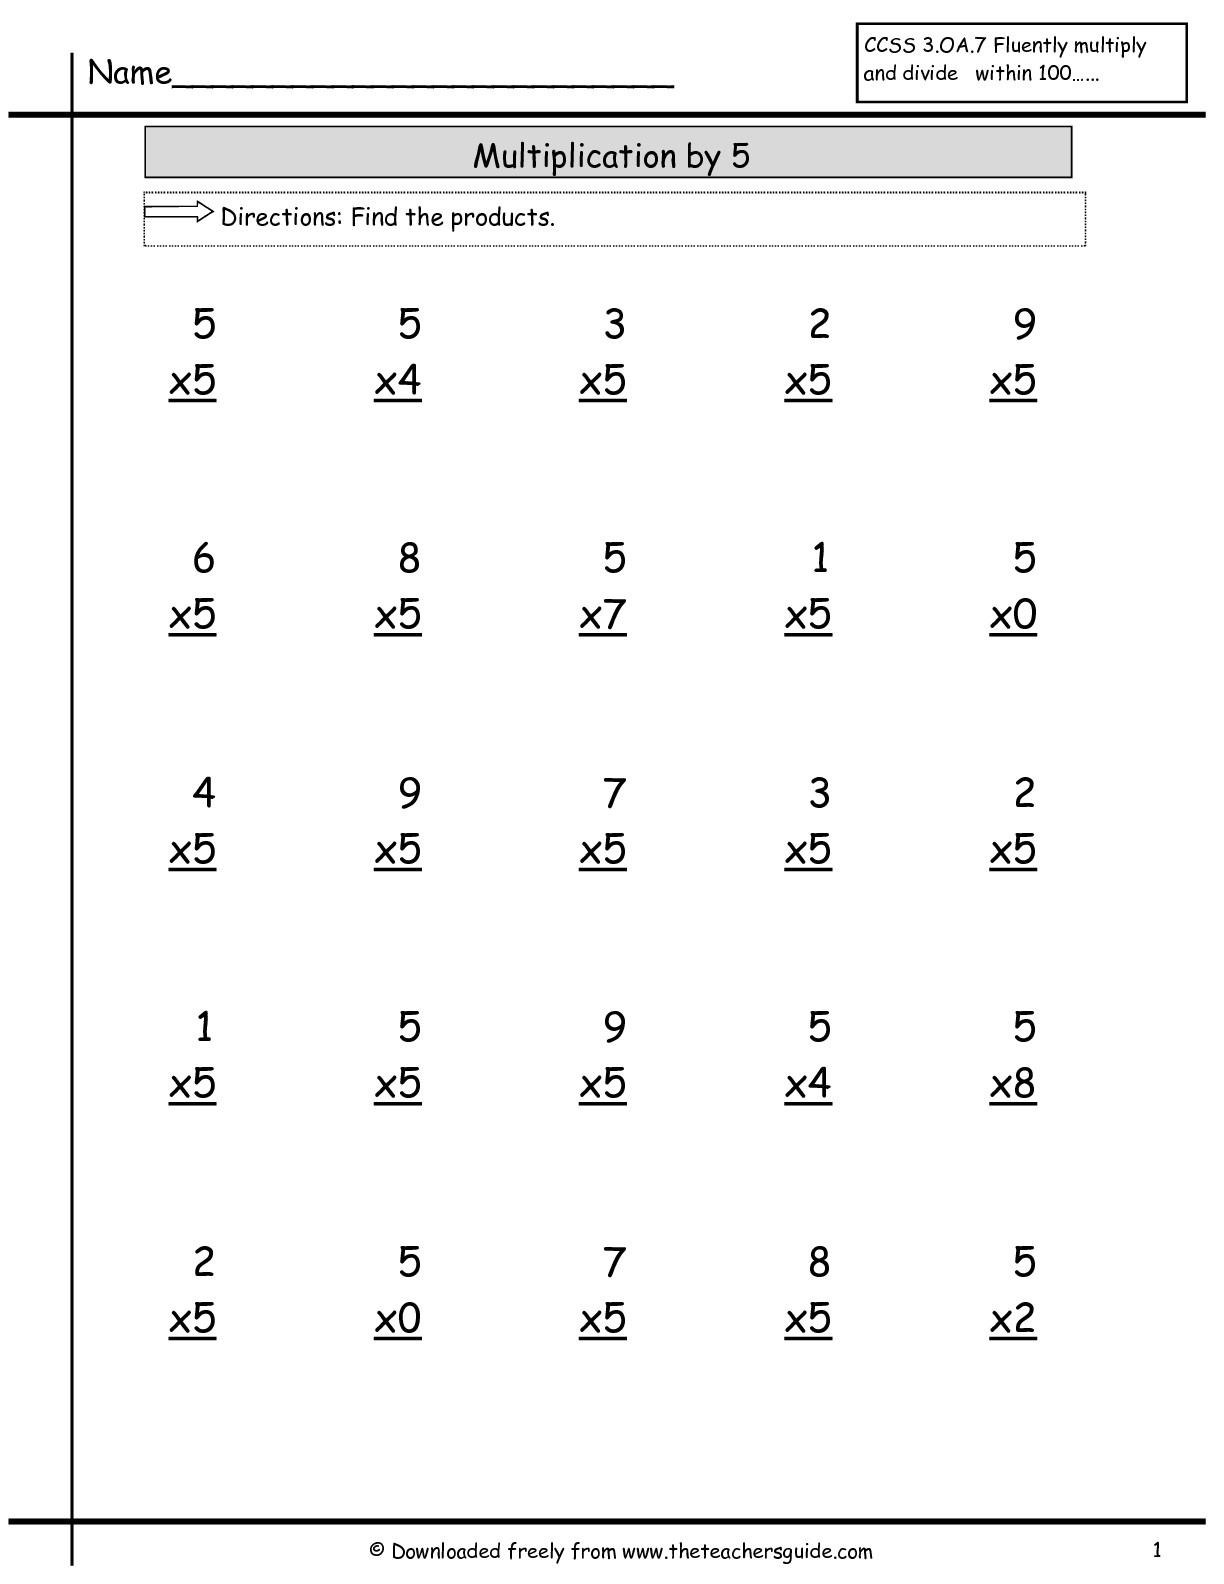 Multiplication Worksheets Of 2 PrintableMultiplication